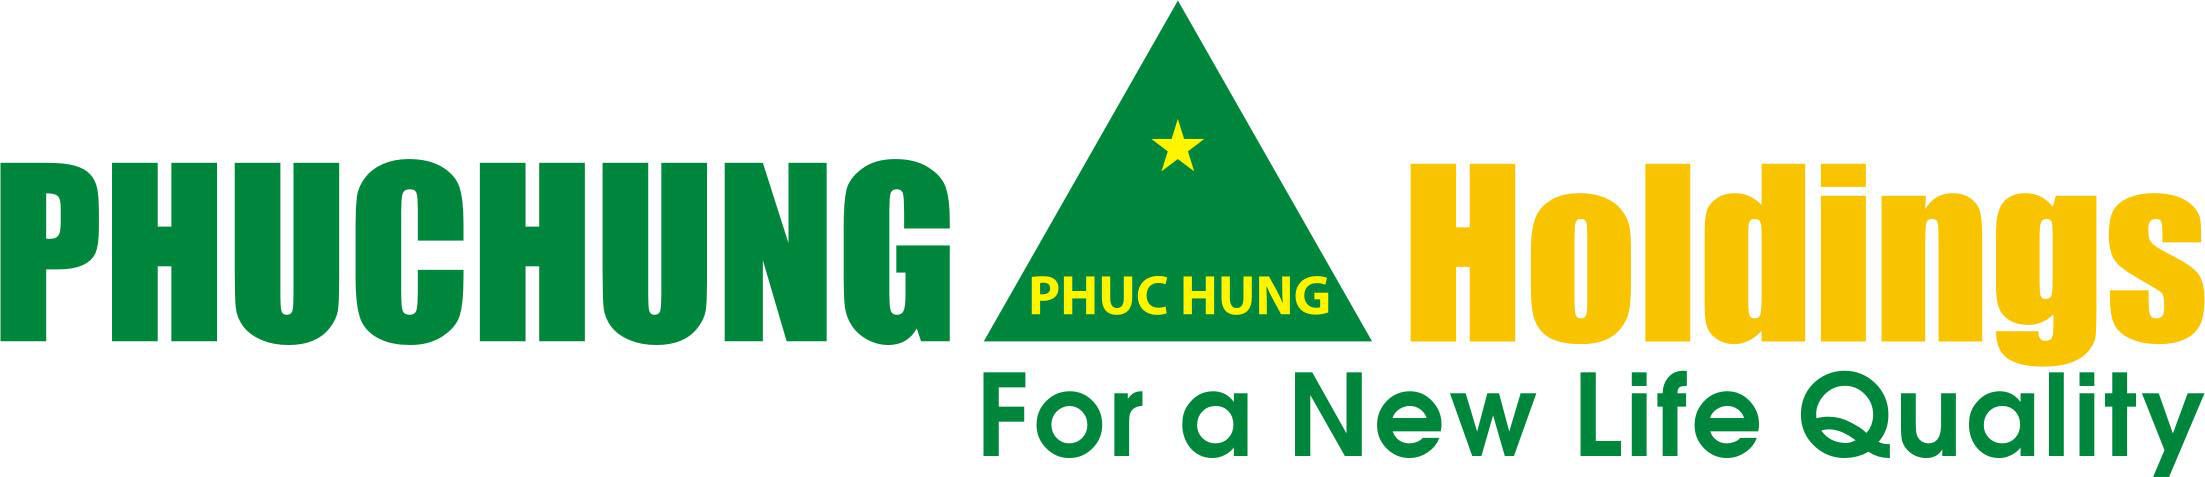 logo-phuc-hung-holdings